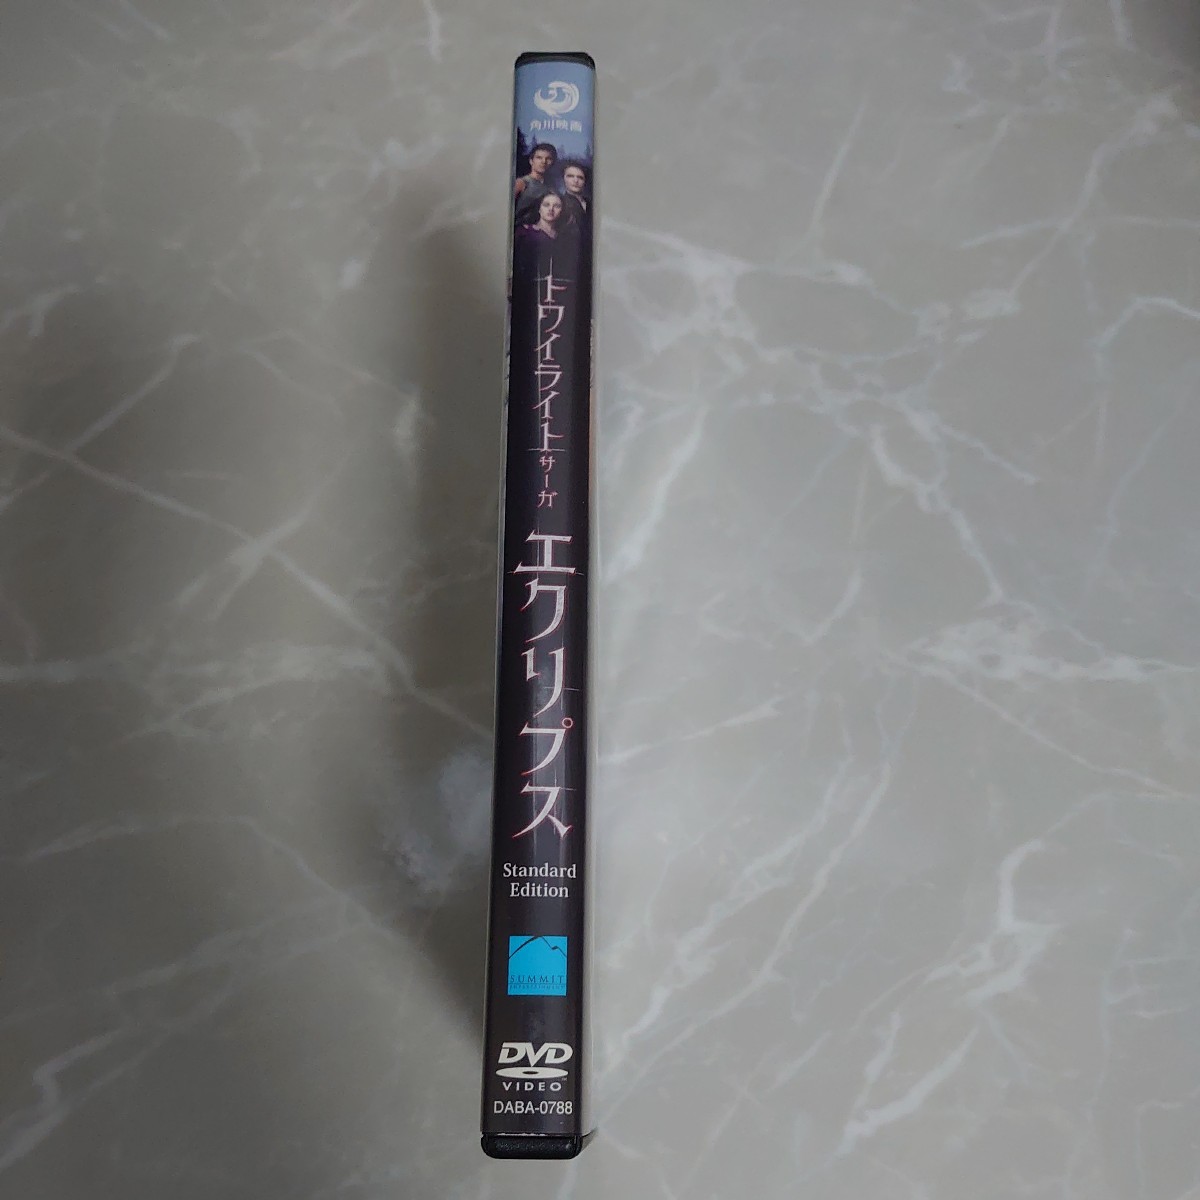 DVD Eclipse twilight Saga standard edition eclipse the twilight saga secondhand goods 1551